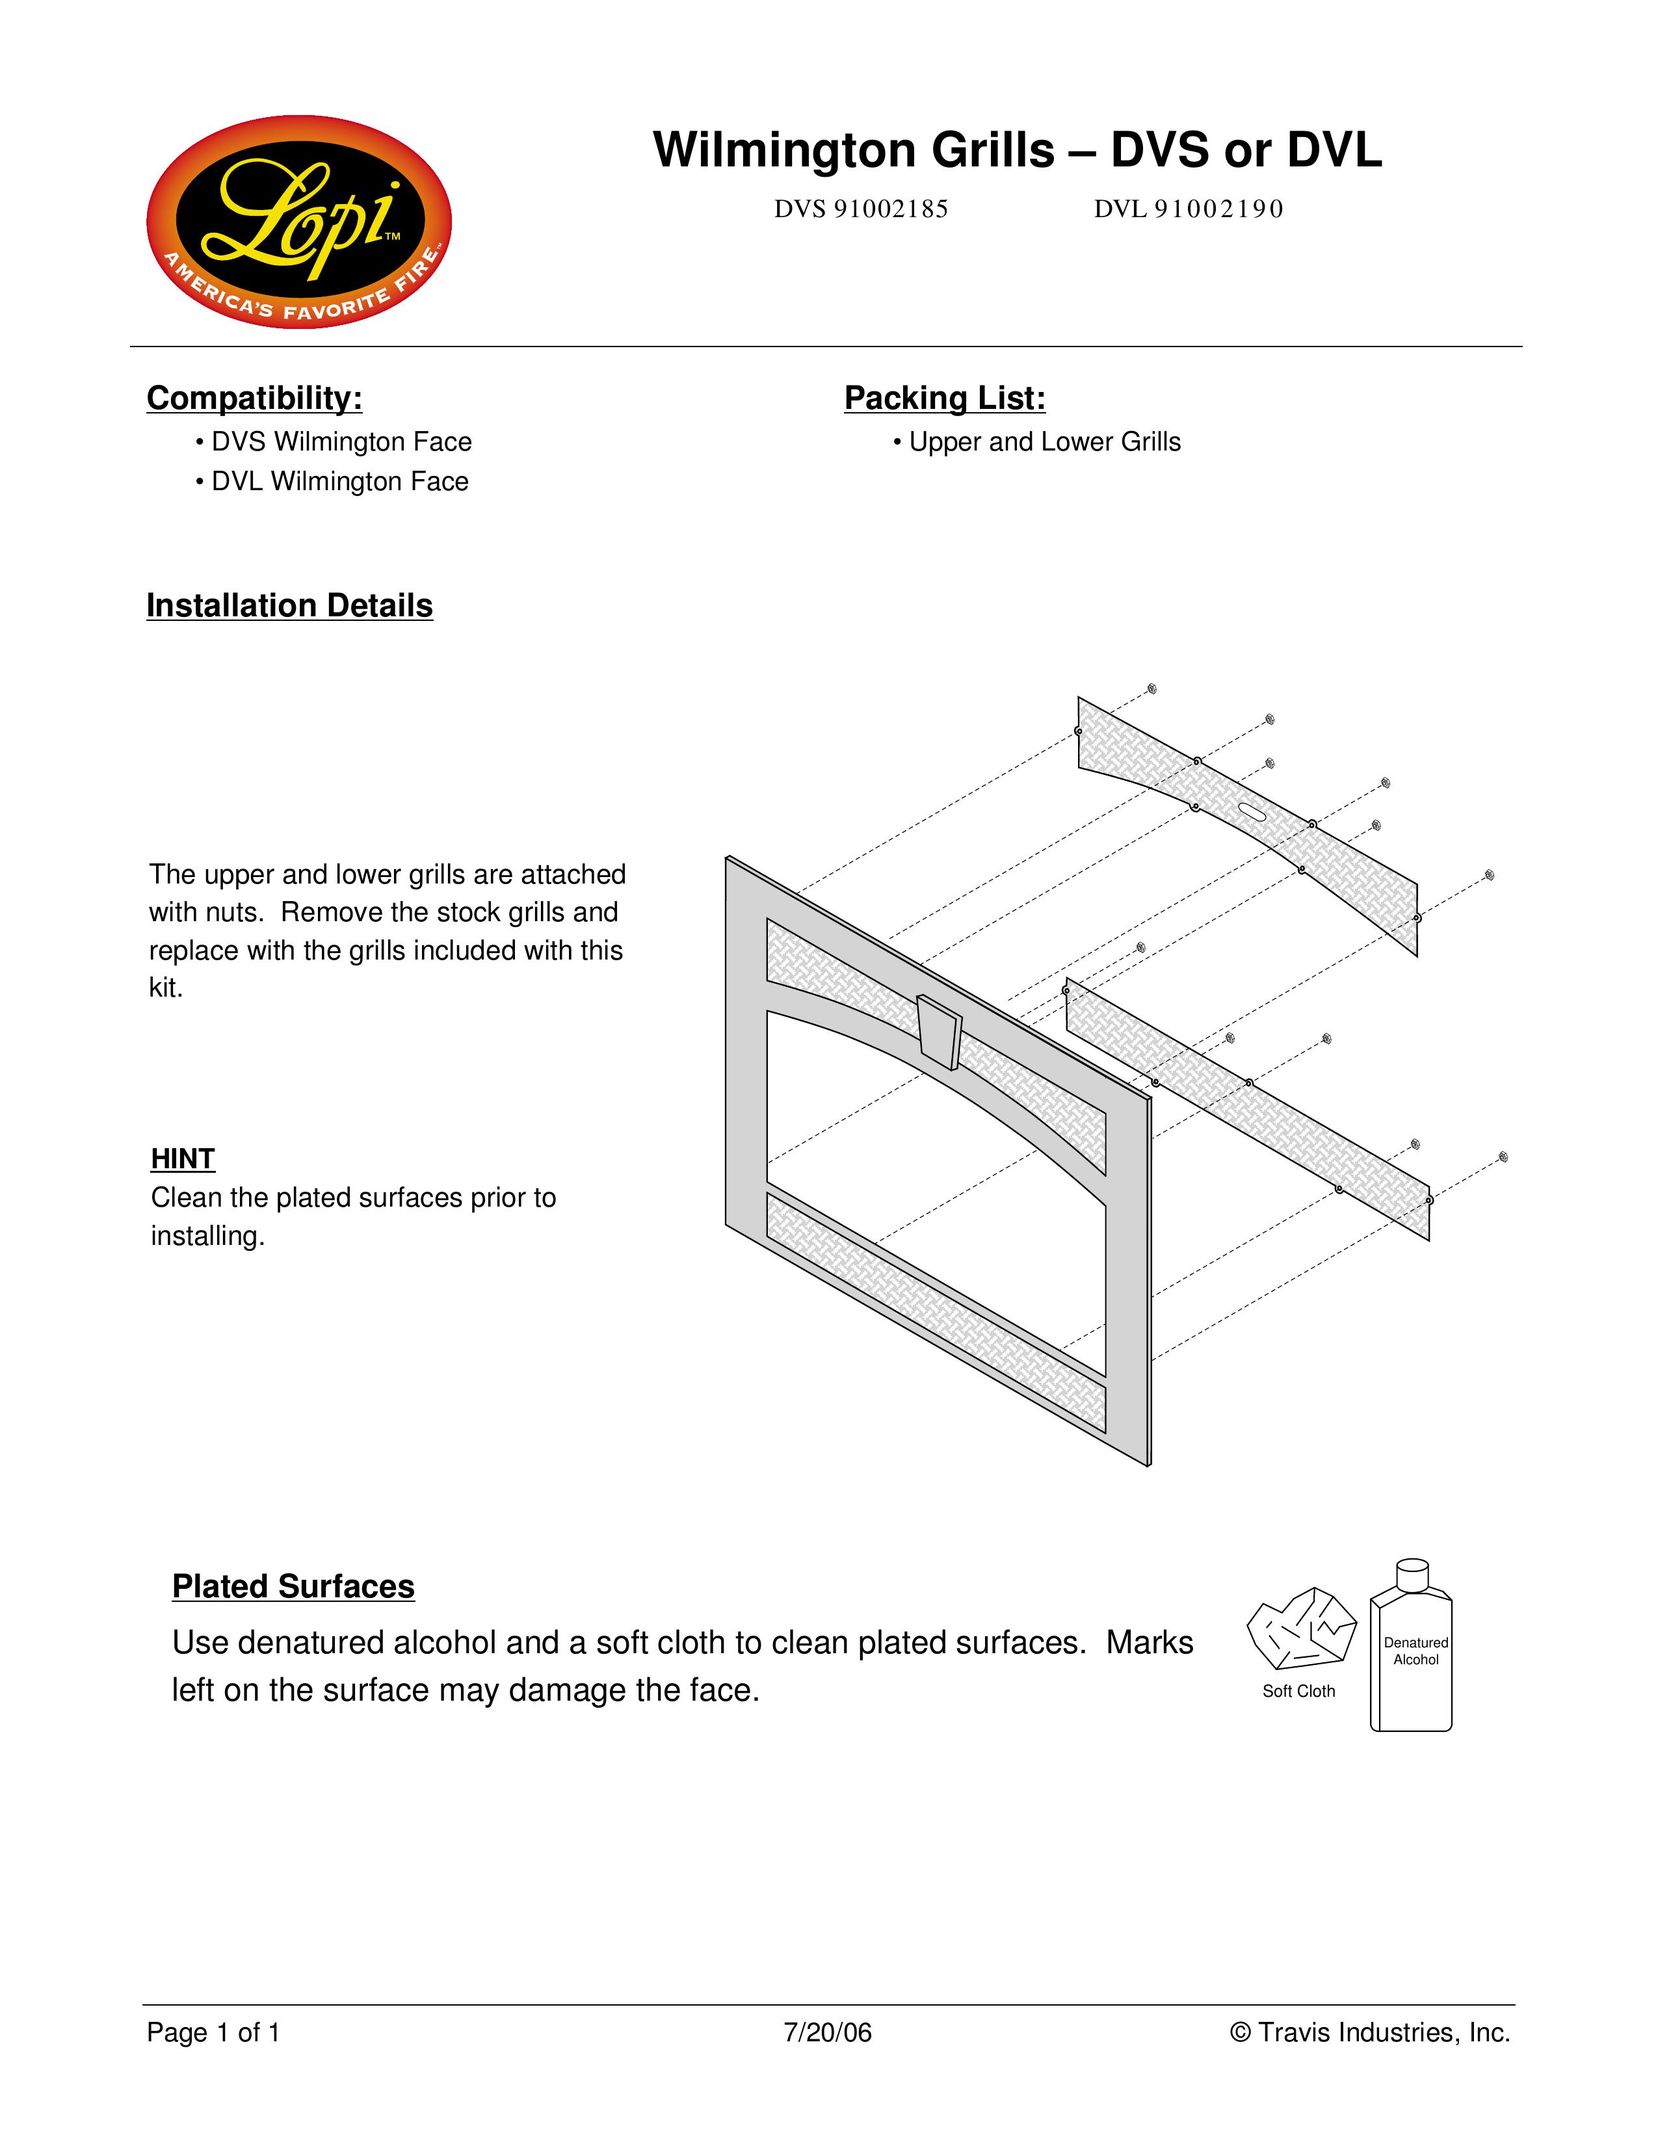 Lopi DVL 91002190 Kitchen Grill User Manual